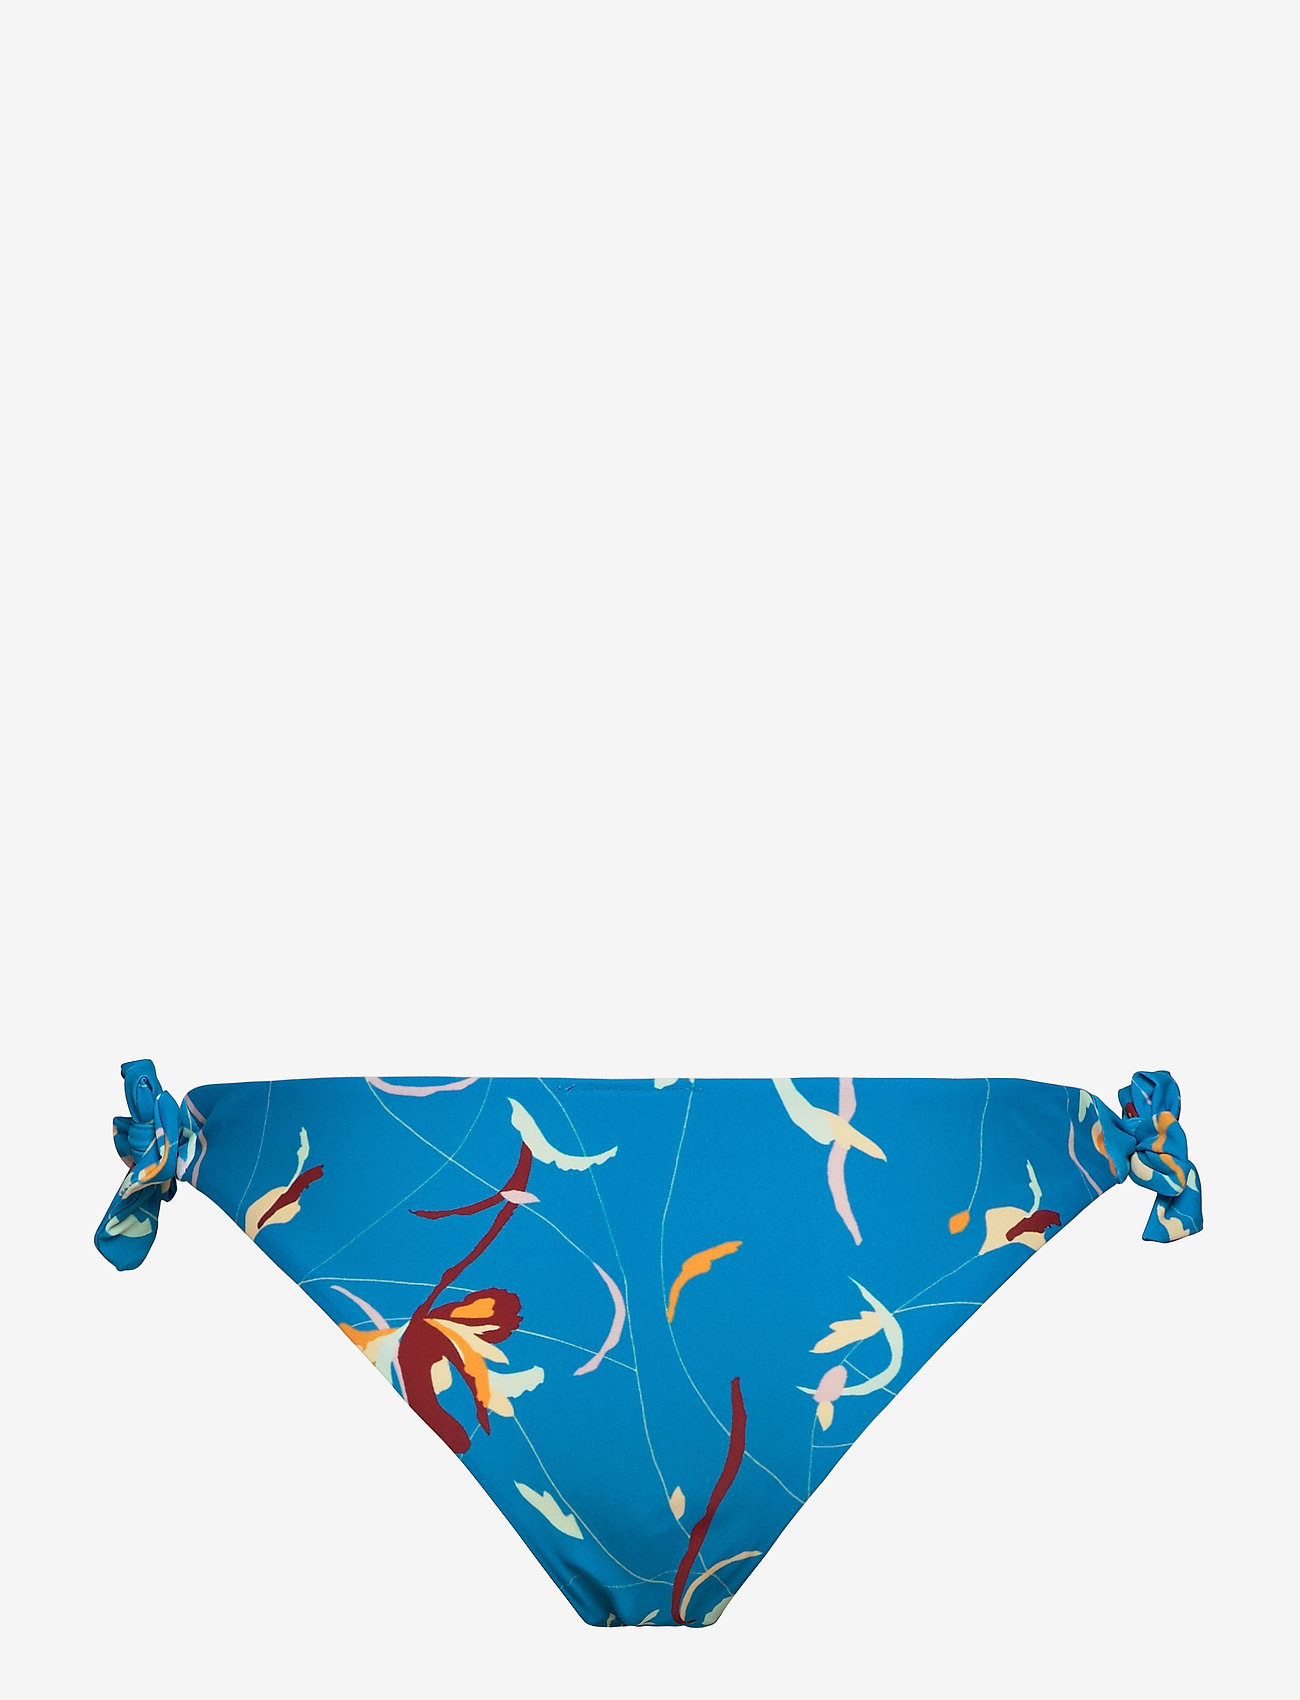 YAS - YASTERIANNA BIKINI BRAZIL - bikinis mit seitenbändern - blue aster - 1